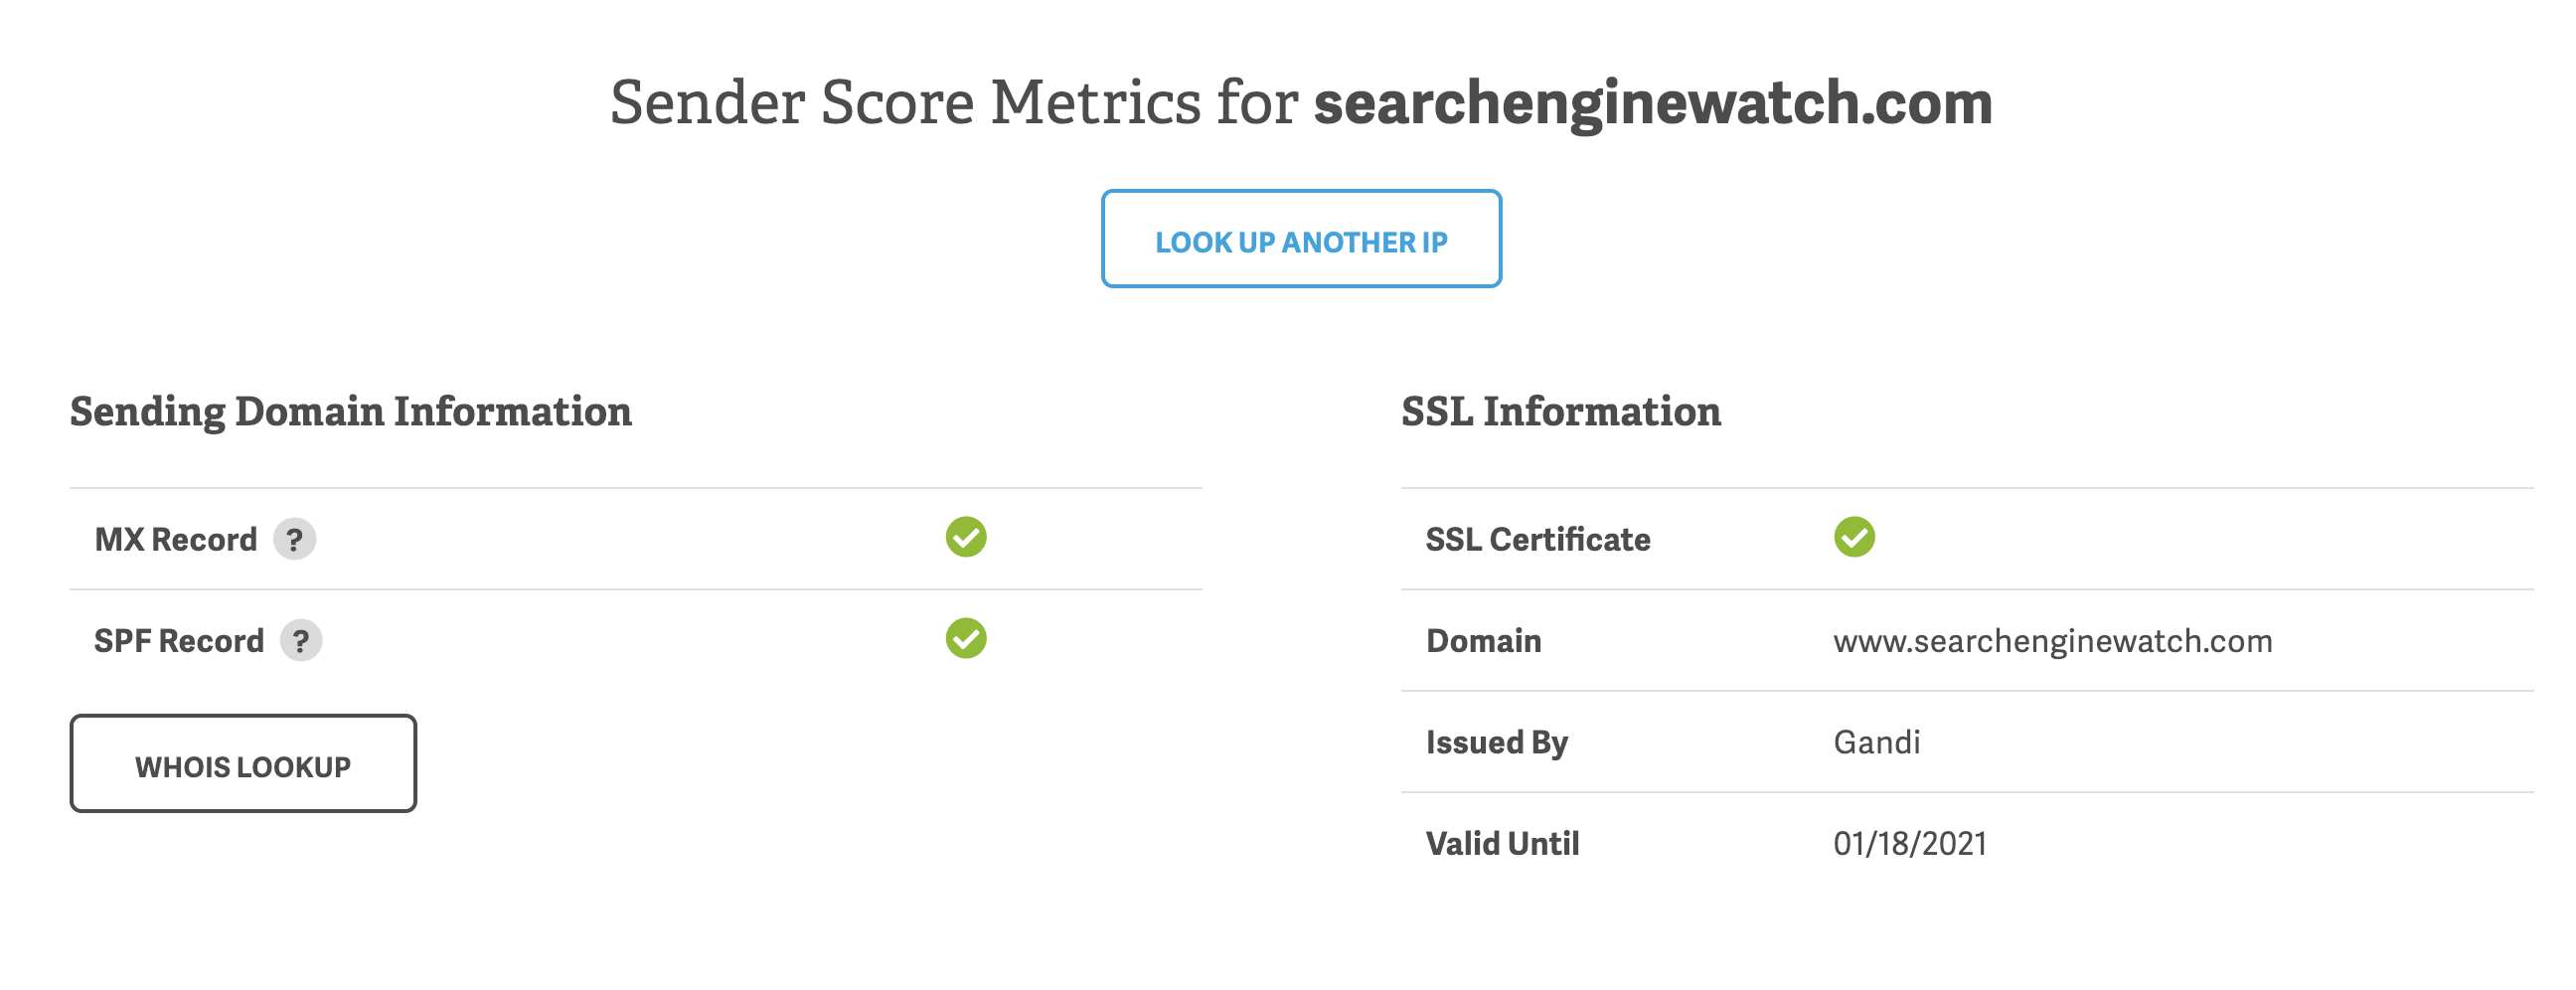 sender score metrics for search engine watch